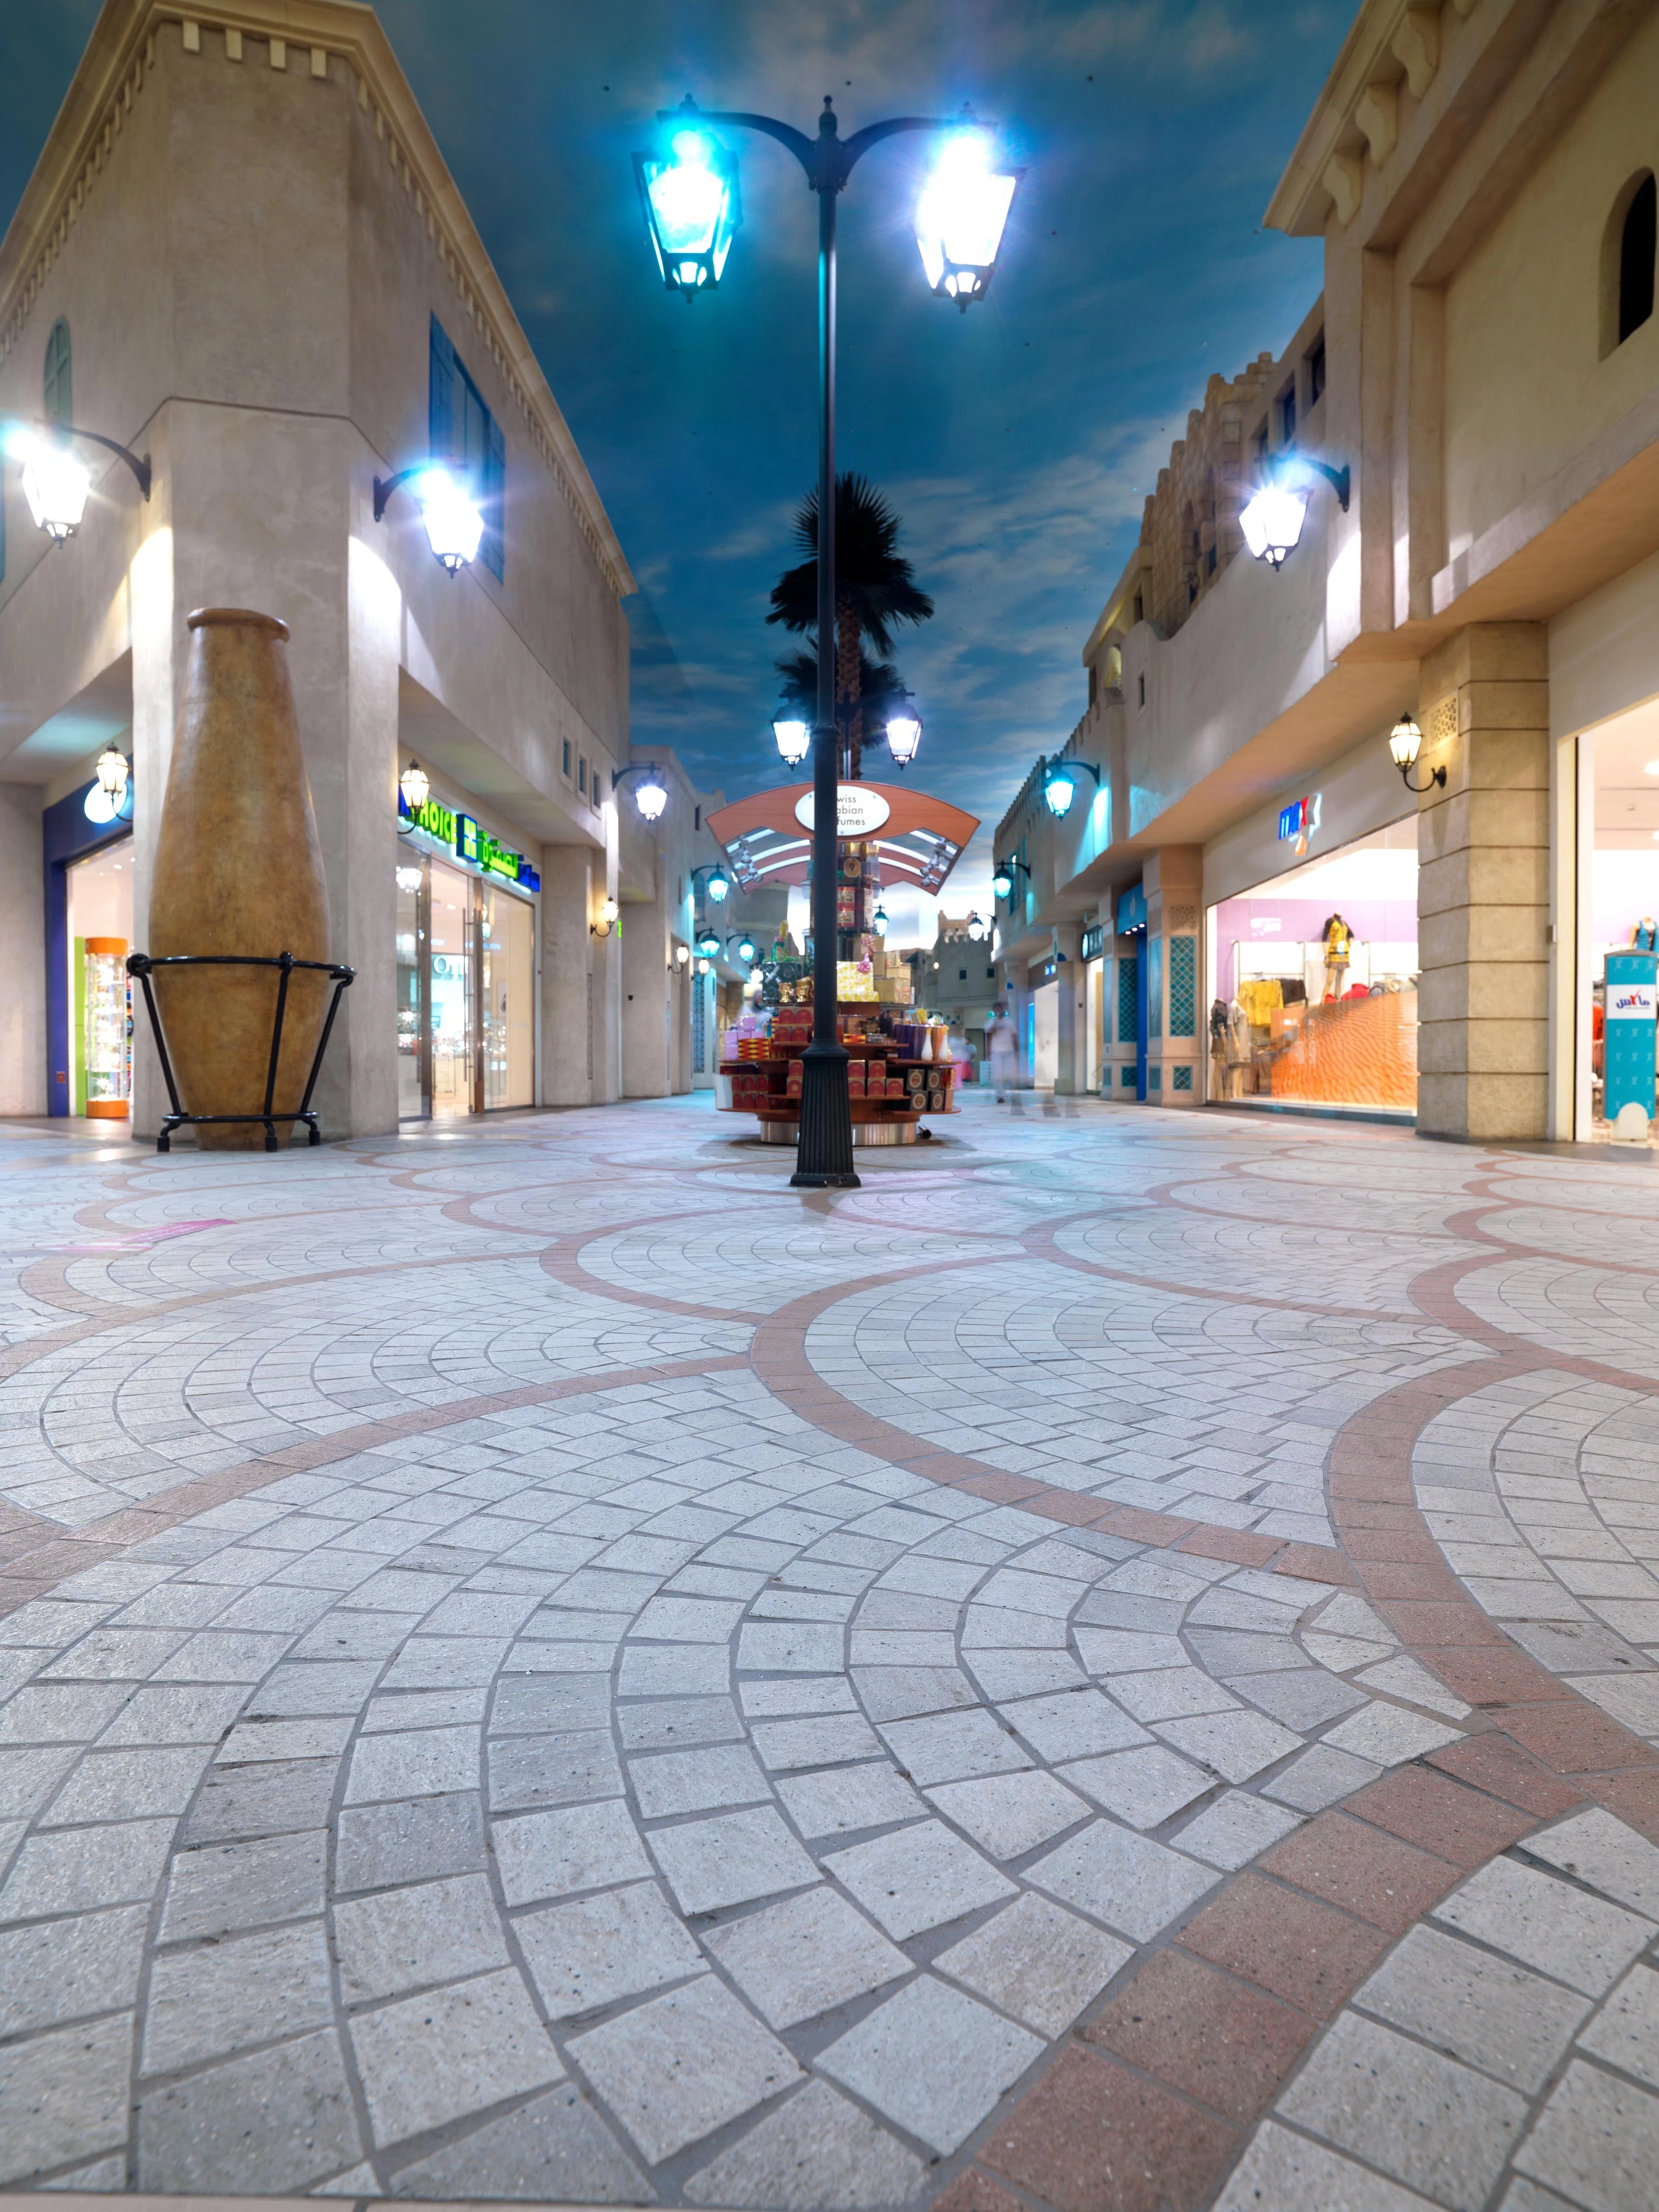 AtlasConcorde IBN Battuta Mall UAE 002